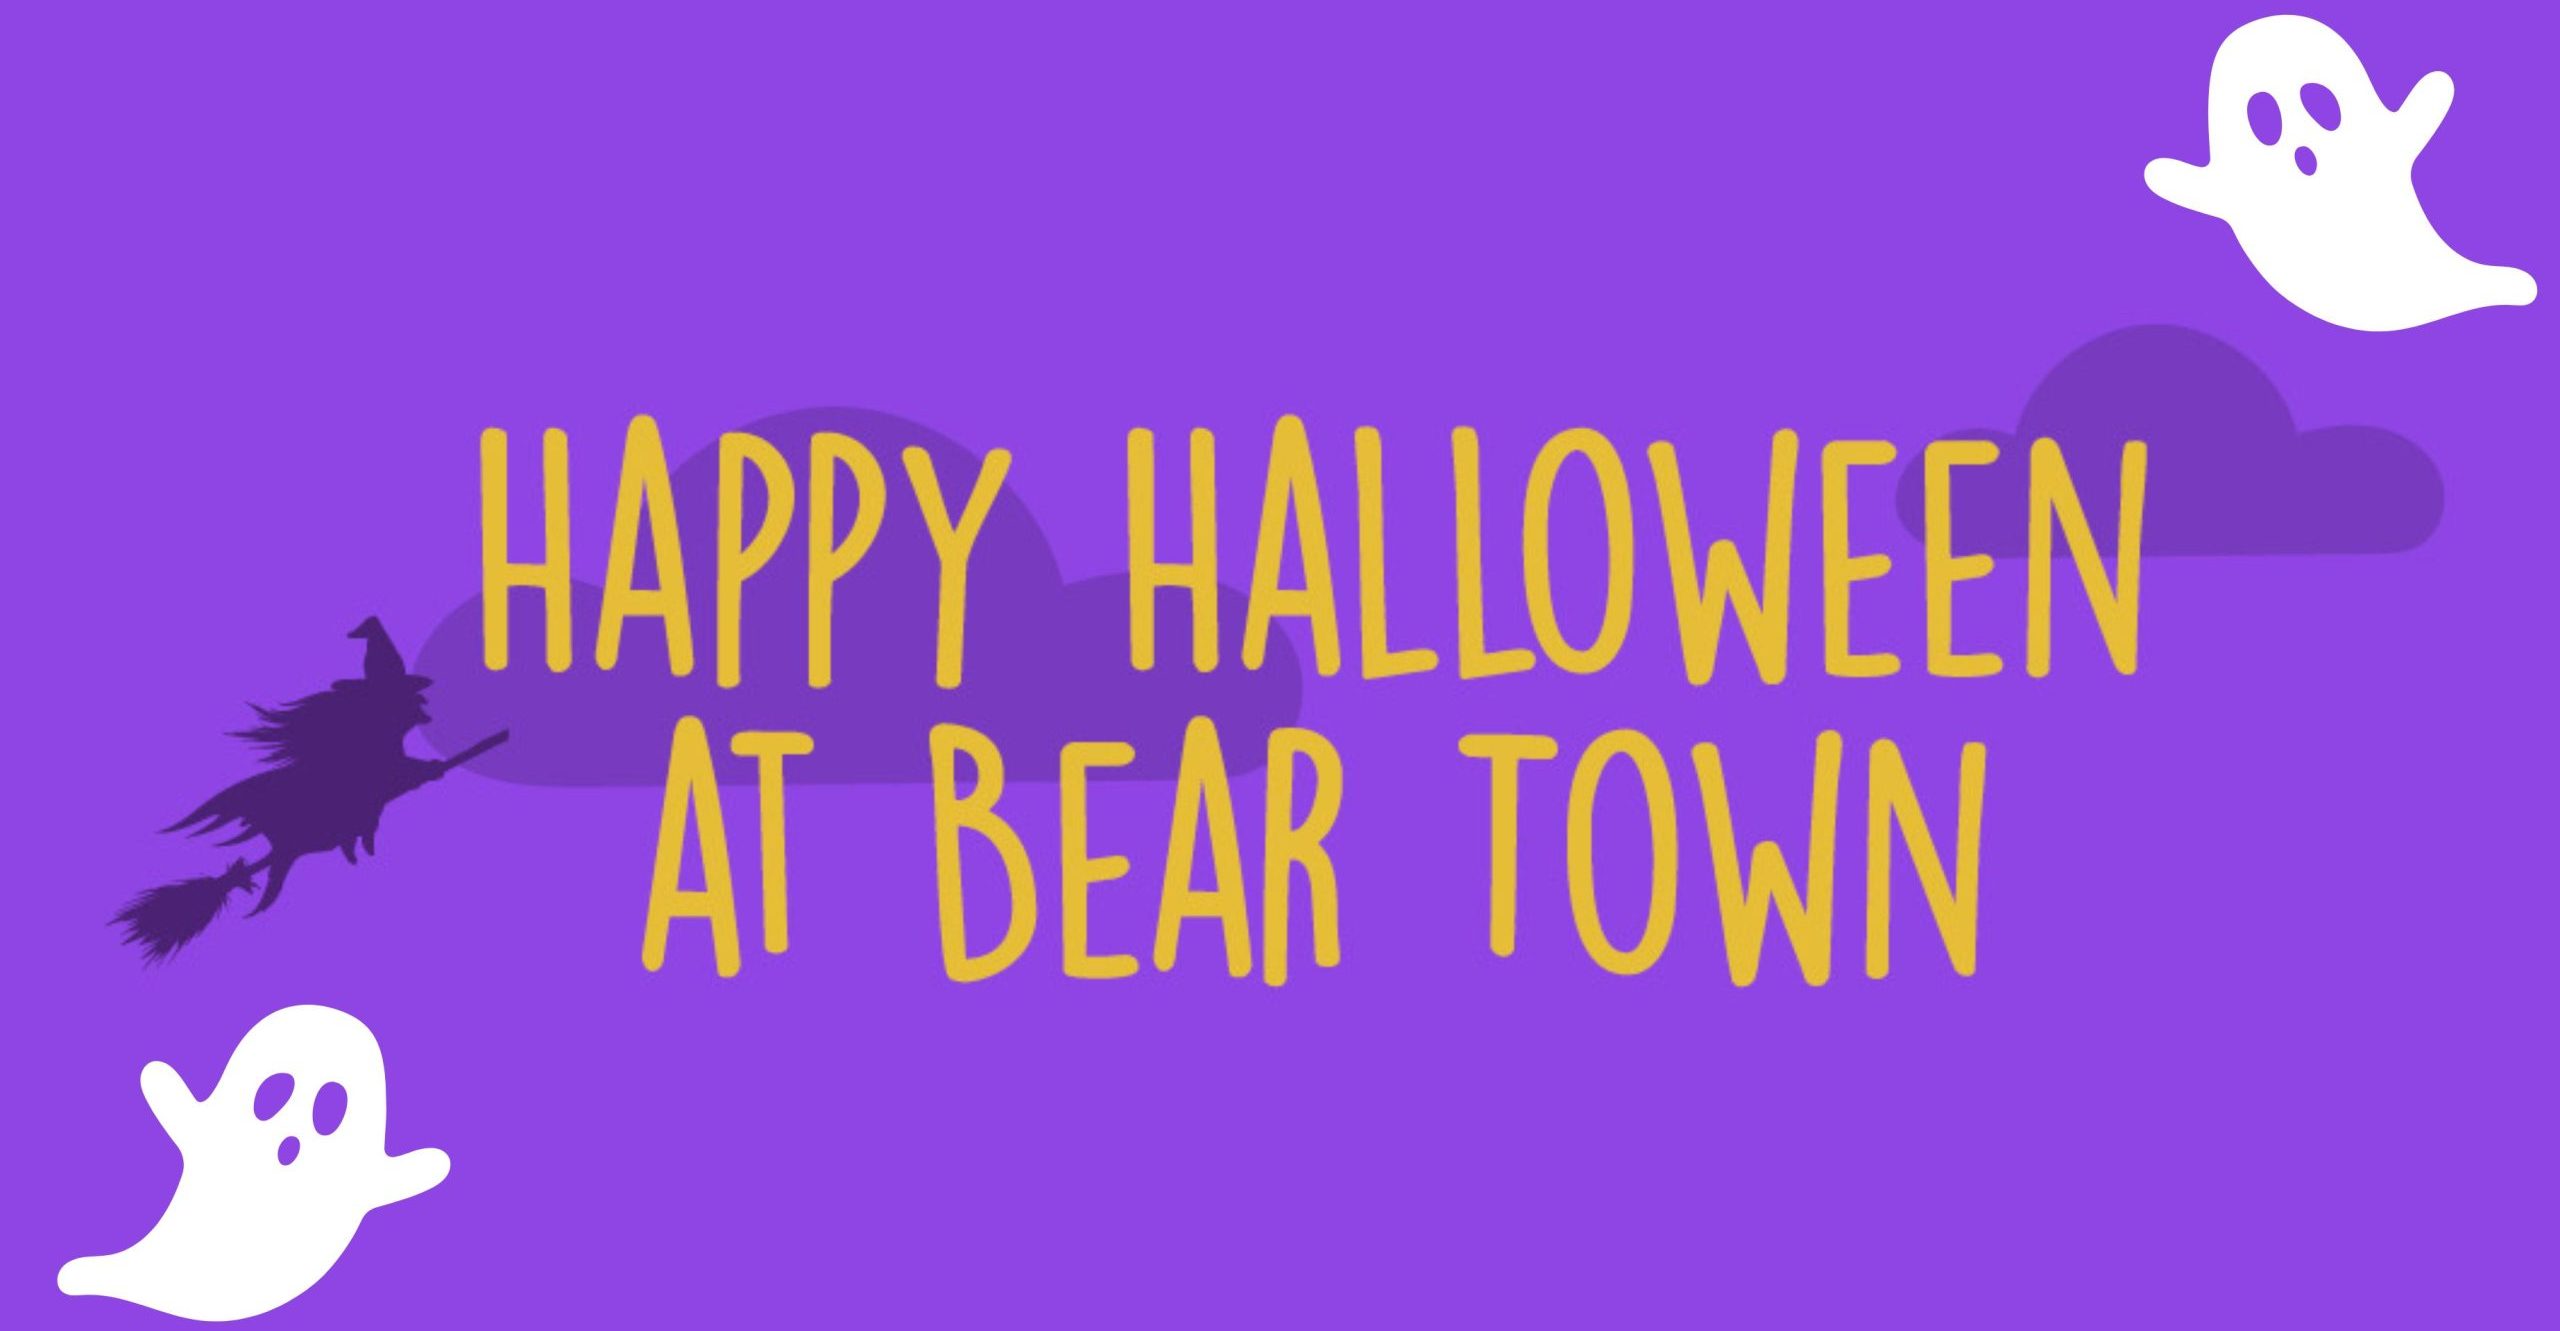 Happy Halloween at Bear Town